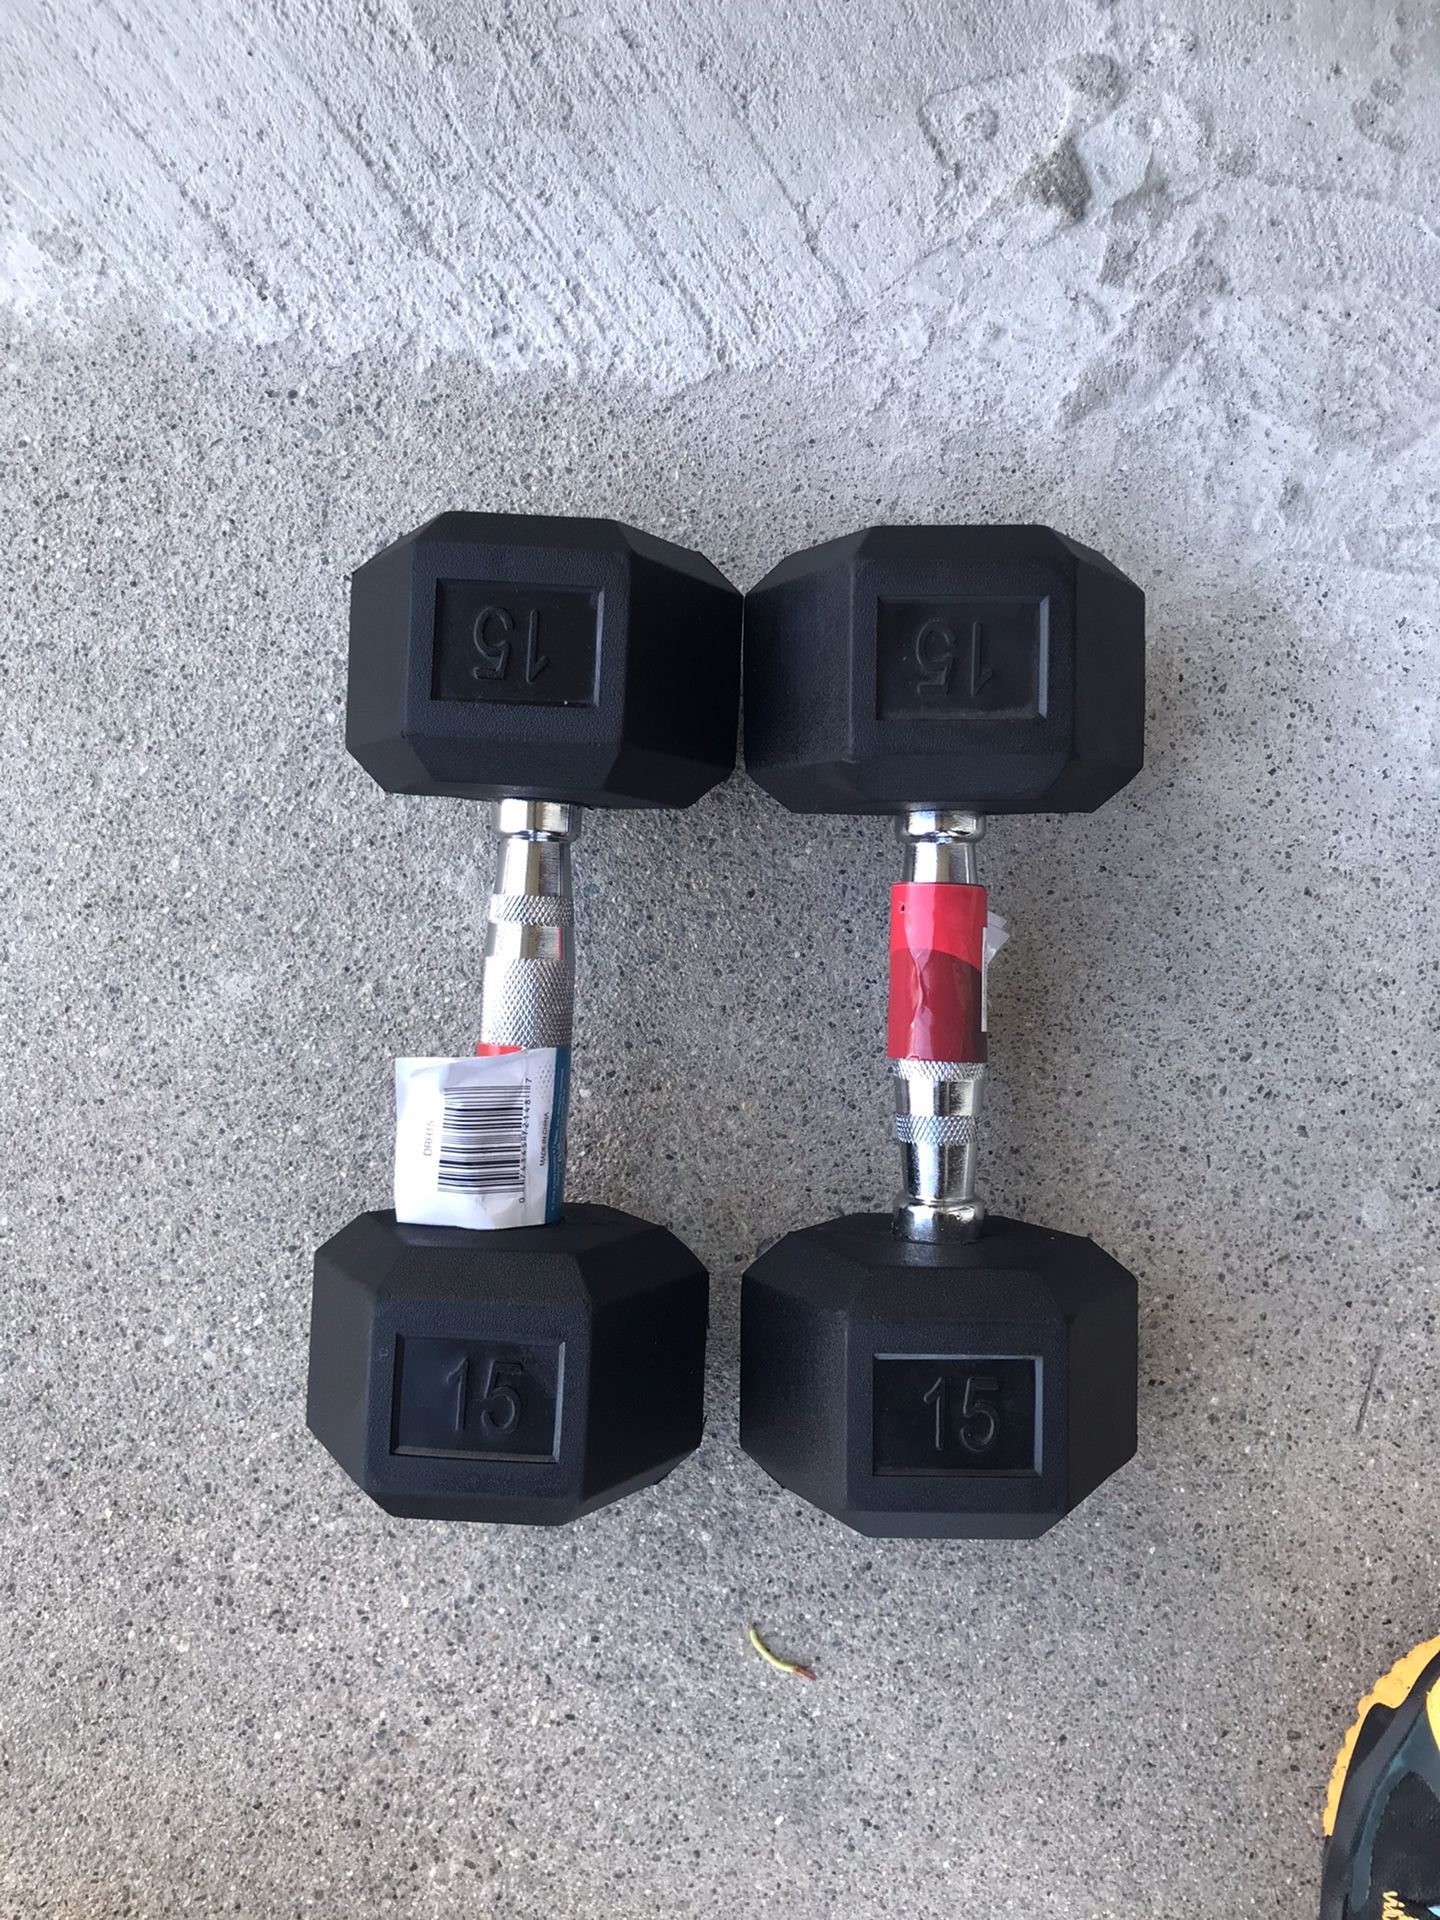 15lbs weight set